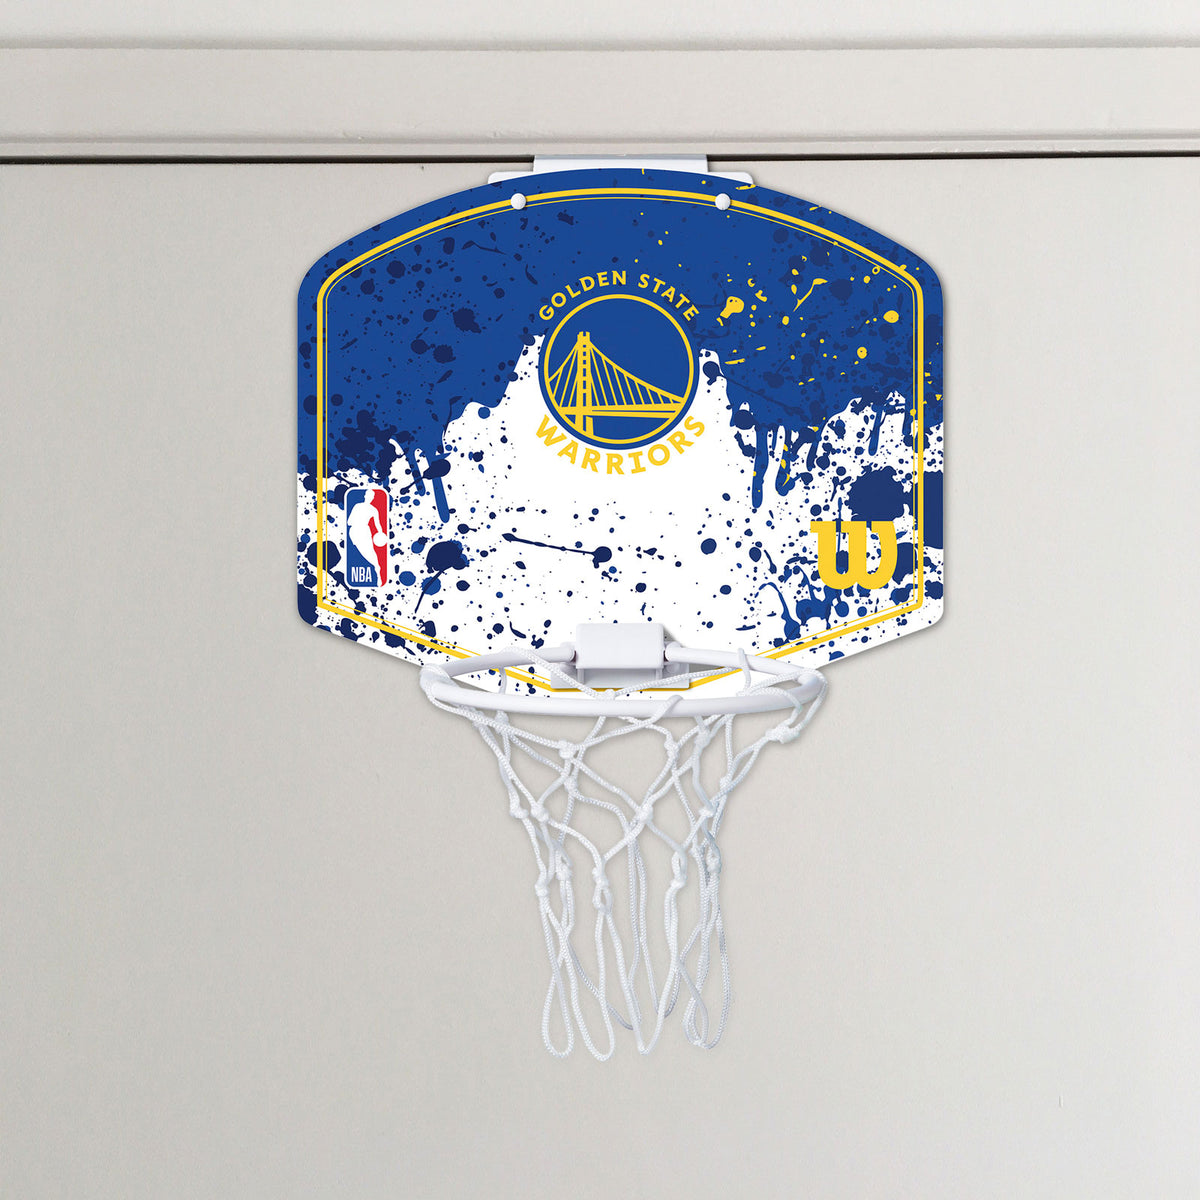 Golden State Warriors NBA Team Mini Hoop